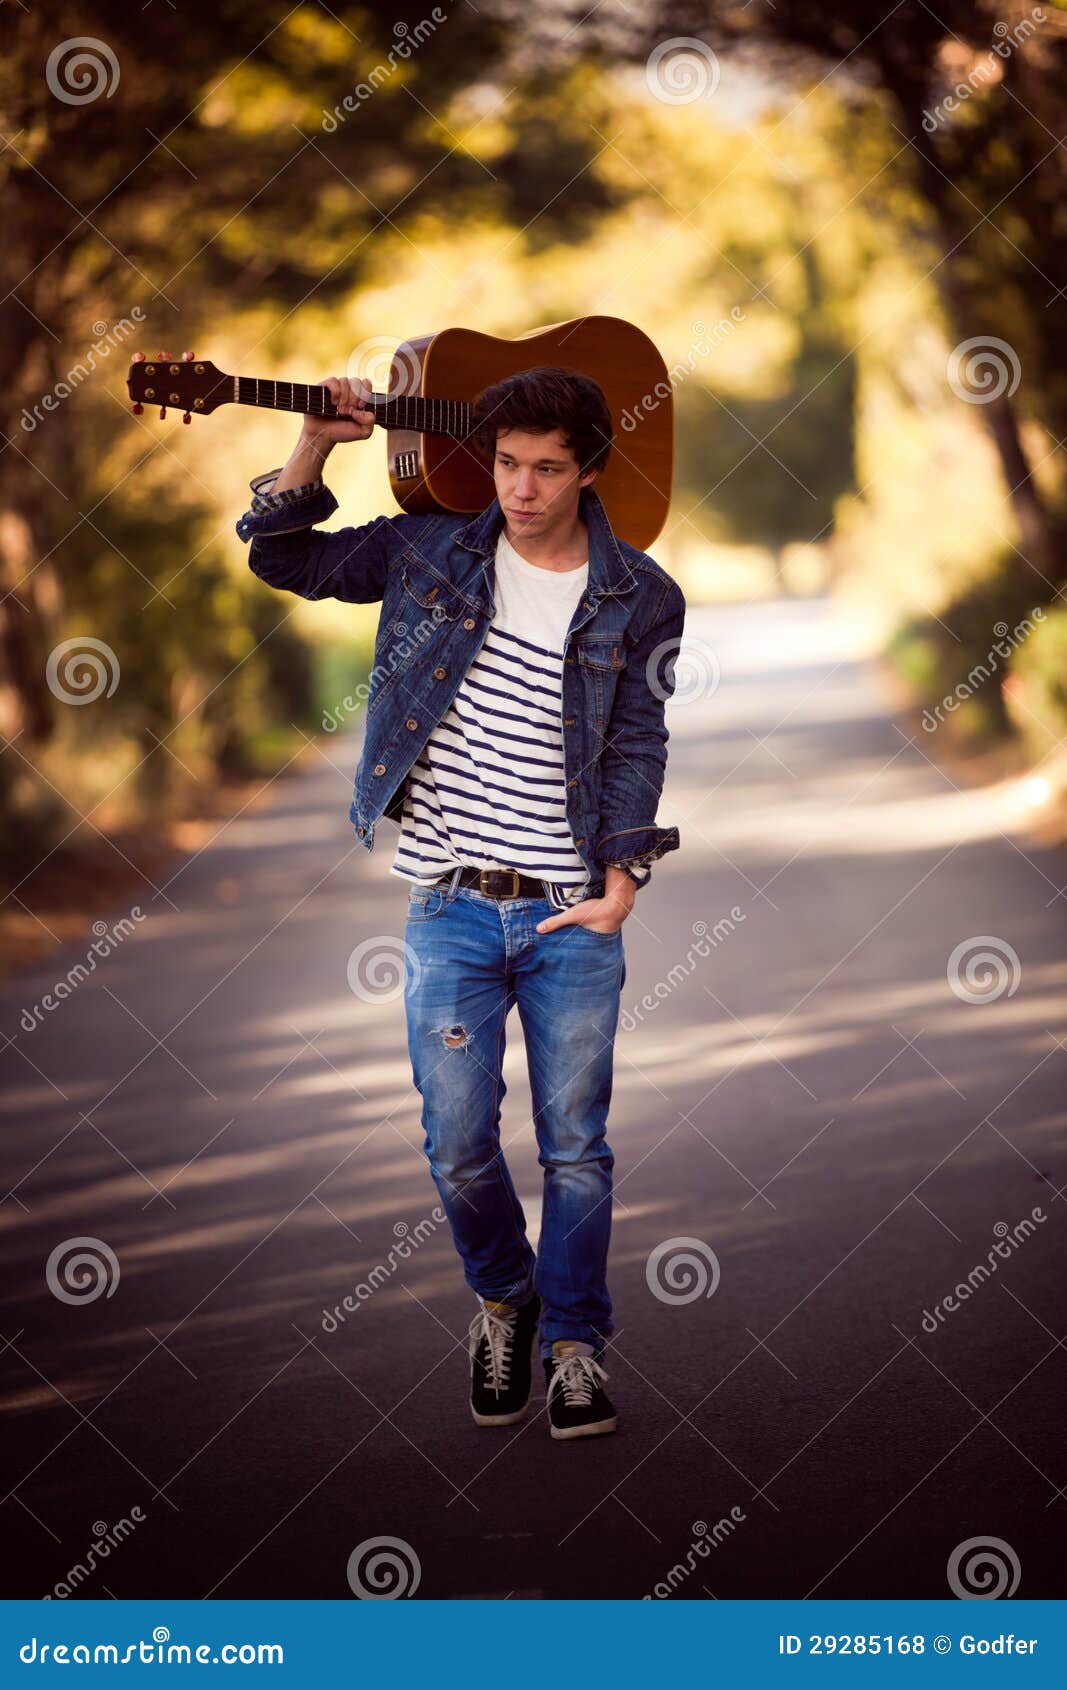 man with guitar